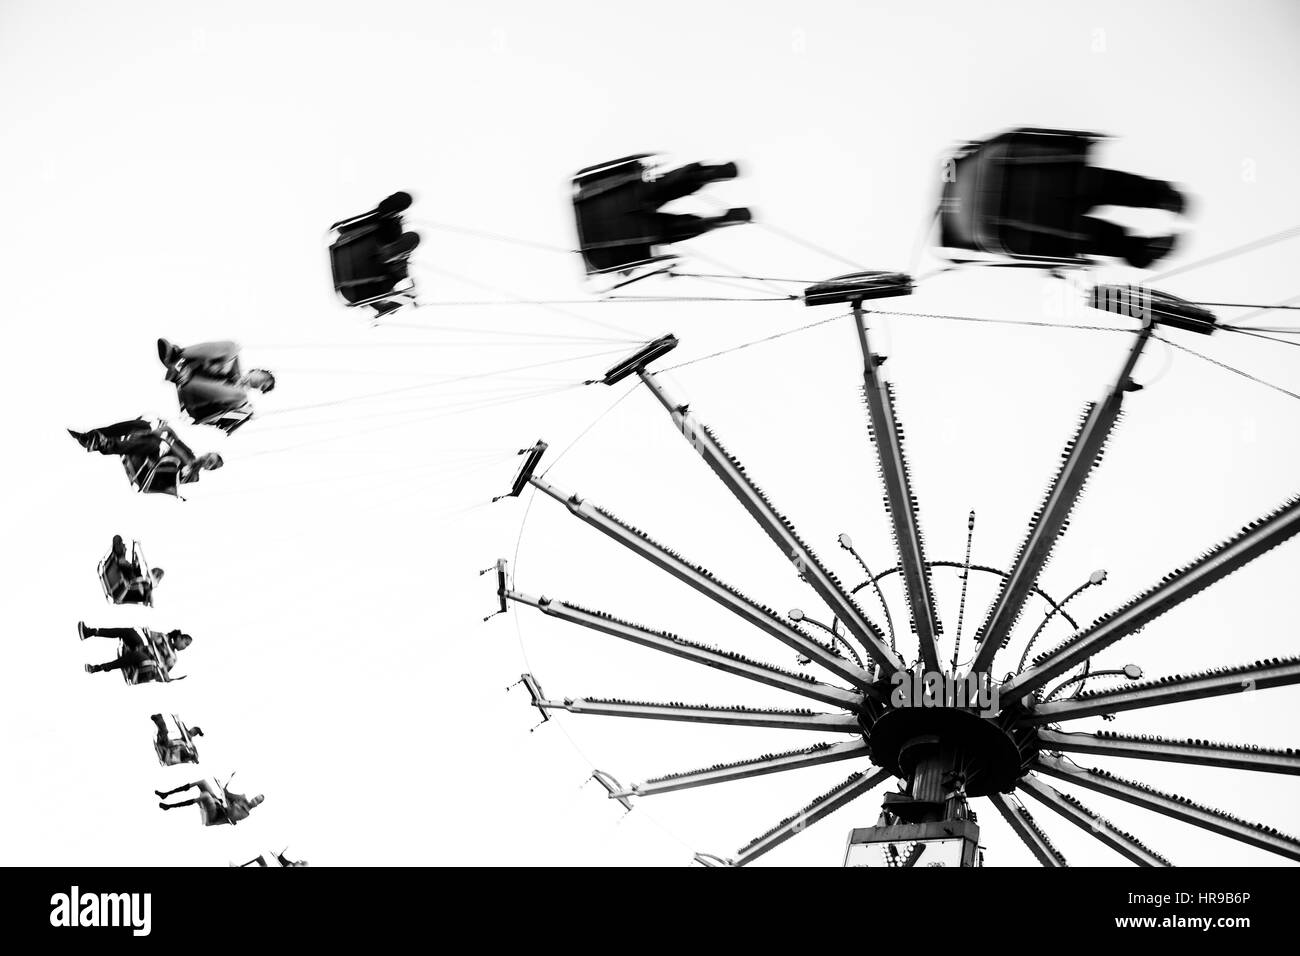 Spinning swing amusement ride. Stock Photo